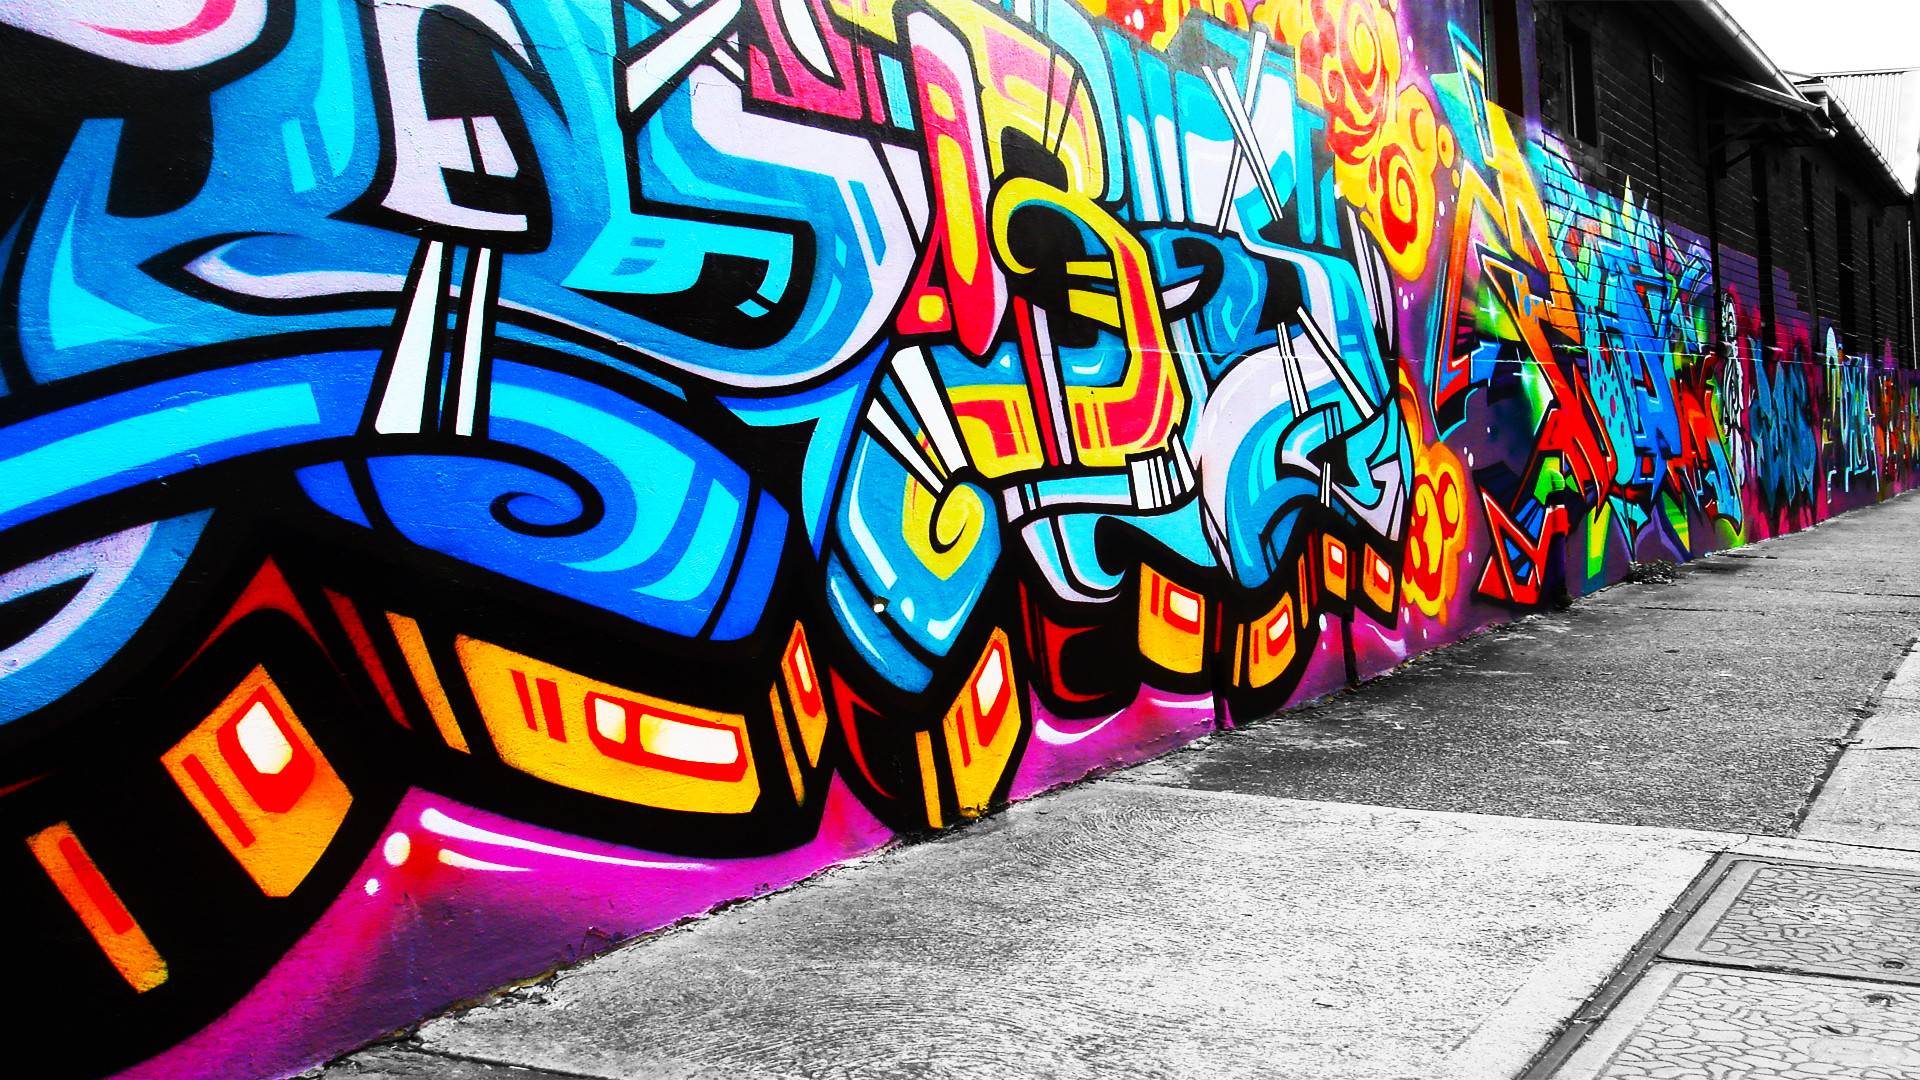 1920x1080 ... Coole Graffiti Bilder 3D Cool Graffiti Art Wallpaper Free Download |  Search, ...